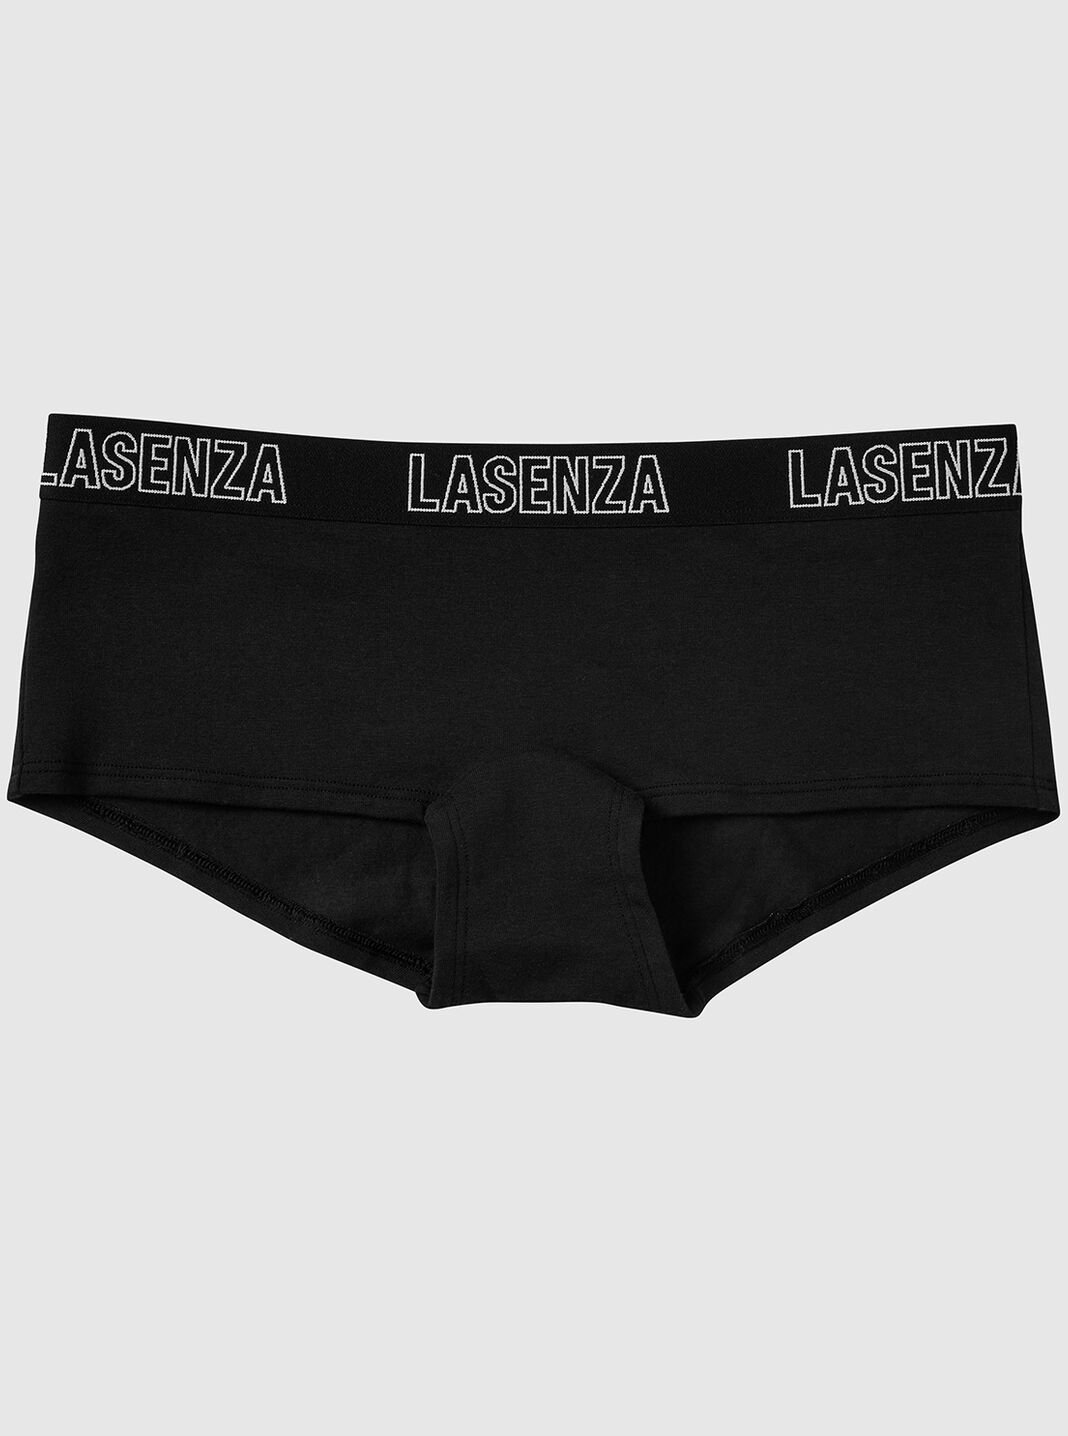 Women Seamless Boyshorts Panties Boxer Brief Underwear, S M L XL, Lot of  5-10